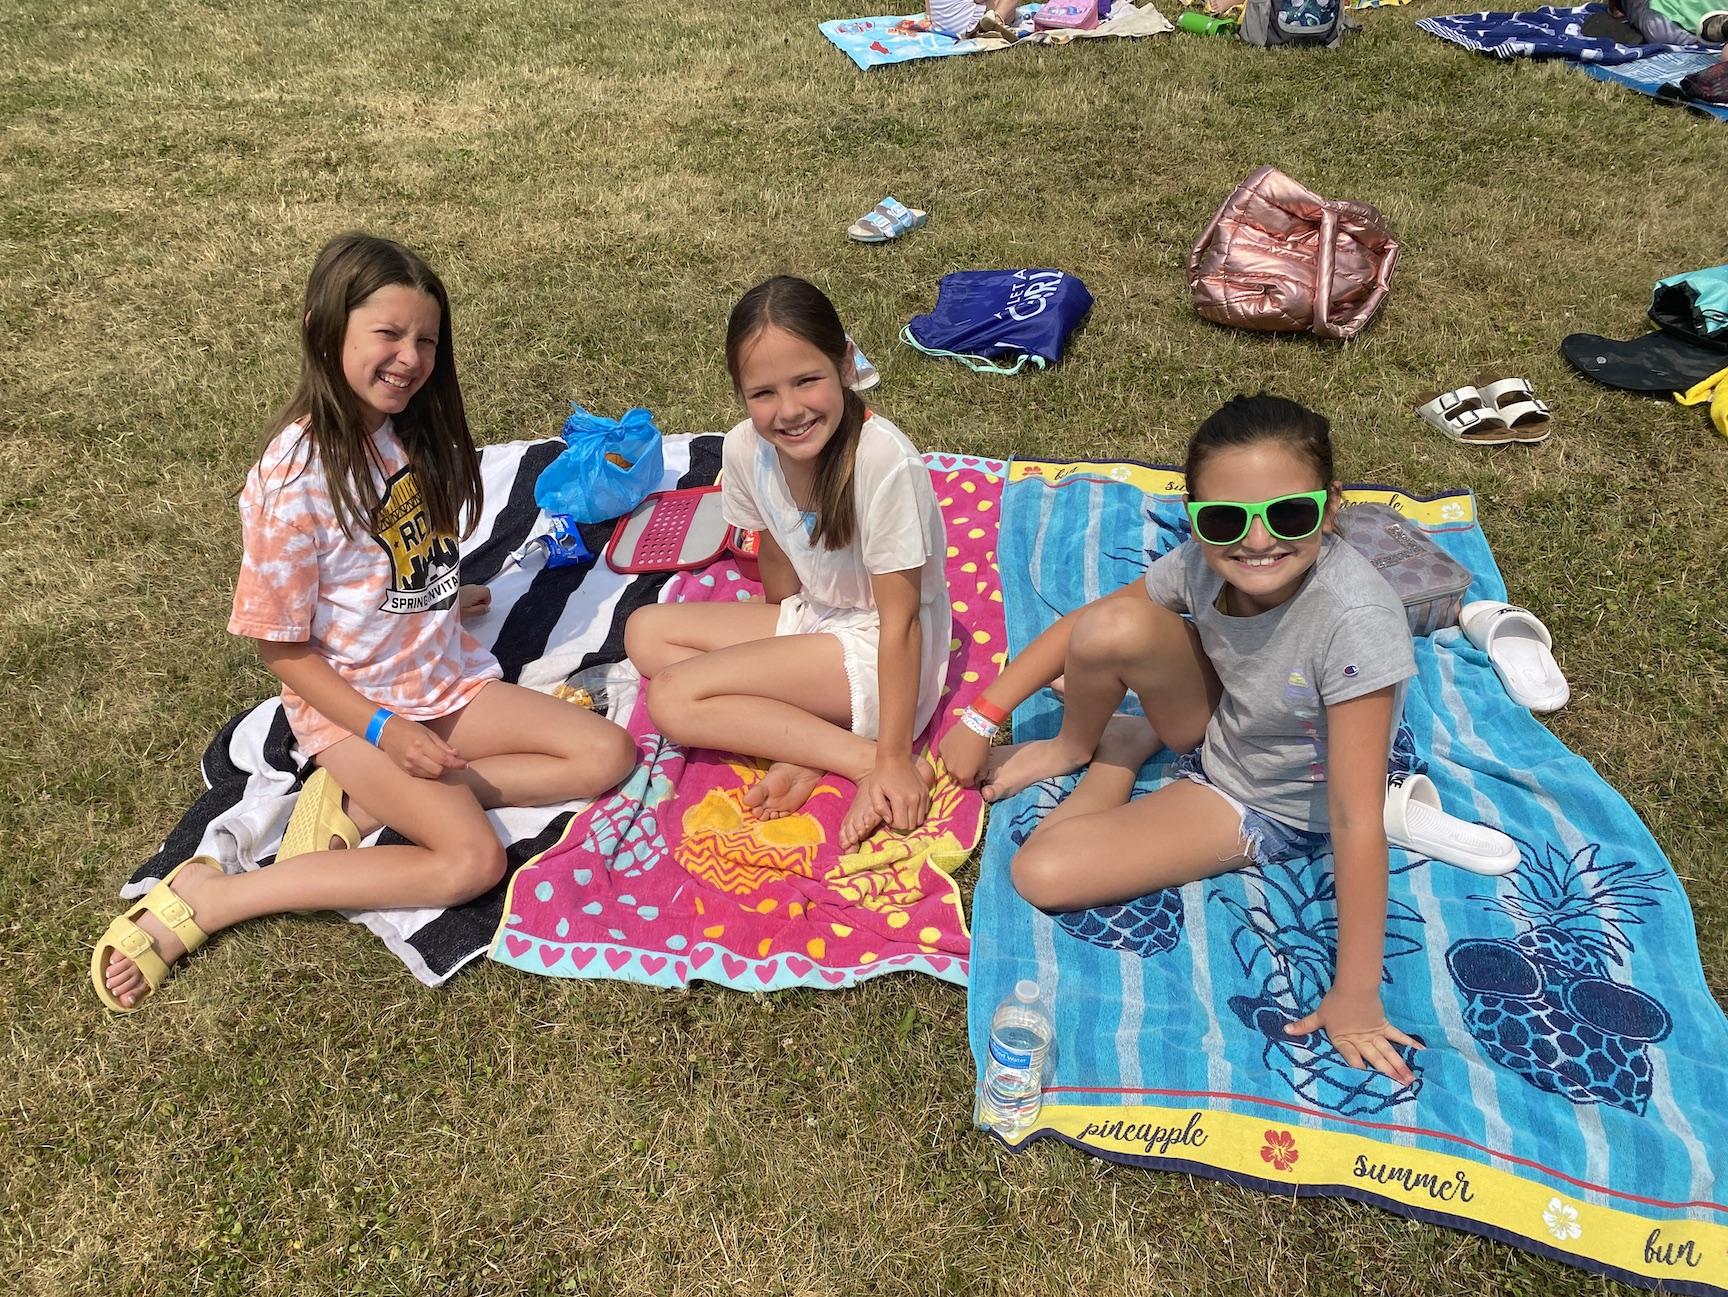 Rising 5th-graders Morgan McIntosh, Tori Boss and Lilliana Tommasino spend some fun time in the sun